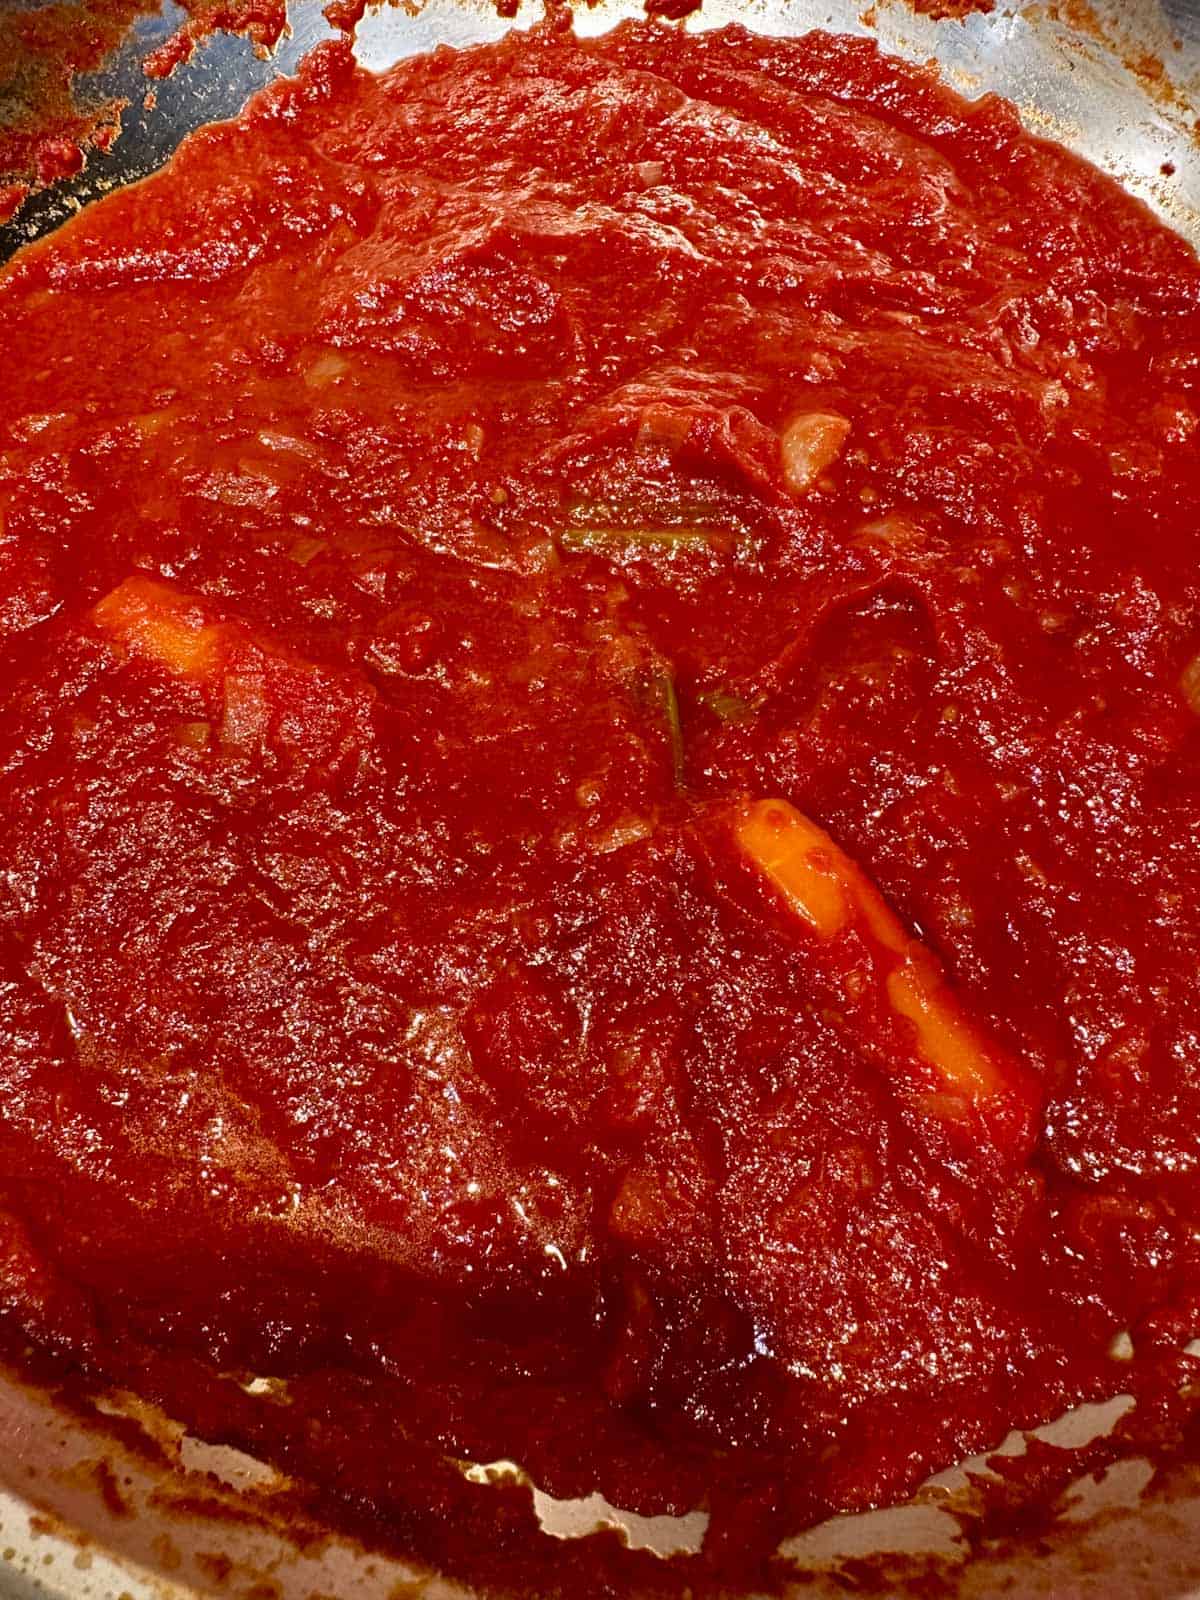 Reduced tomato sauce in a sauté pan.